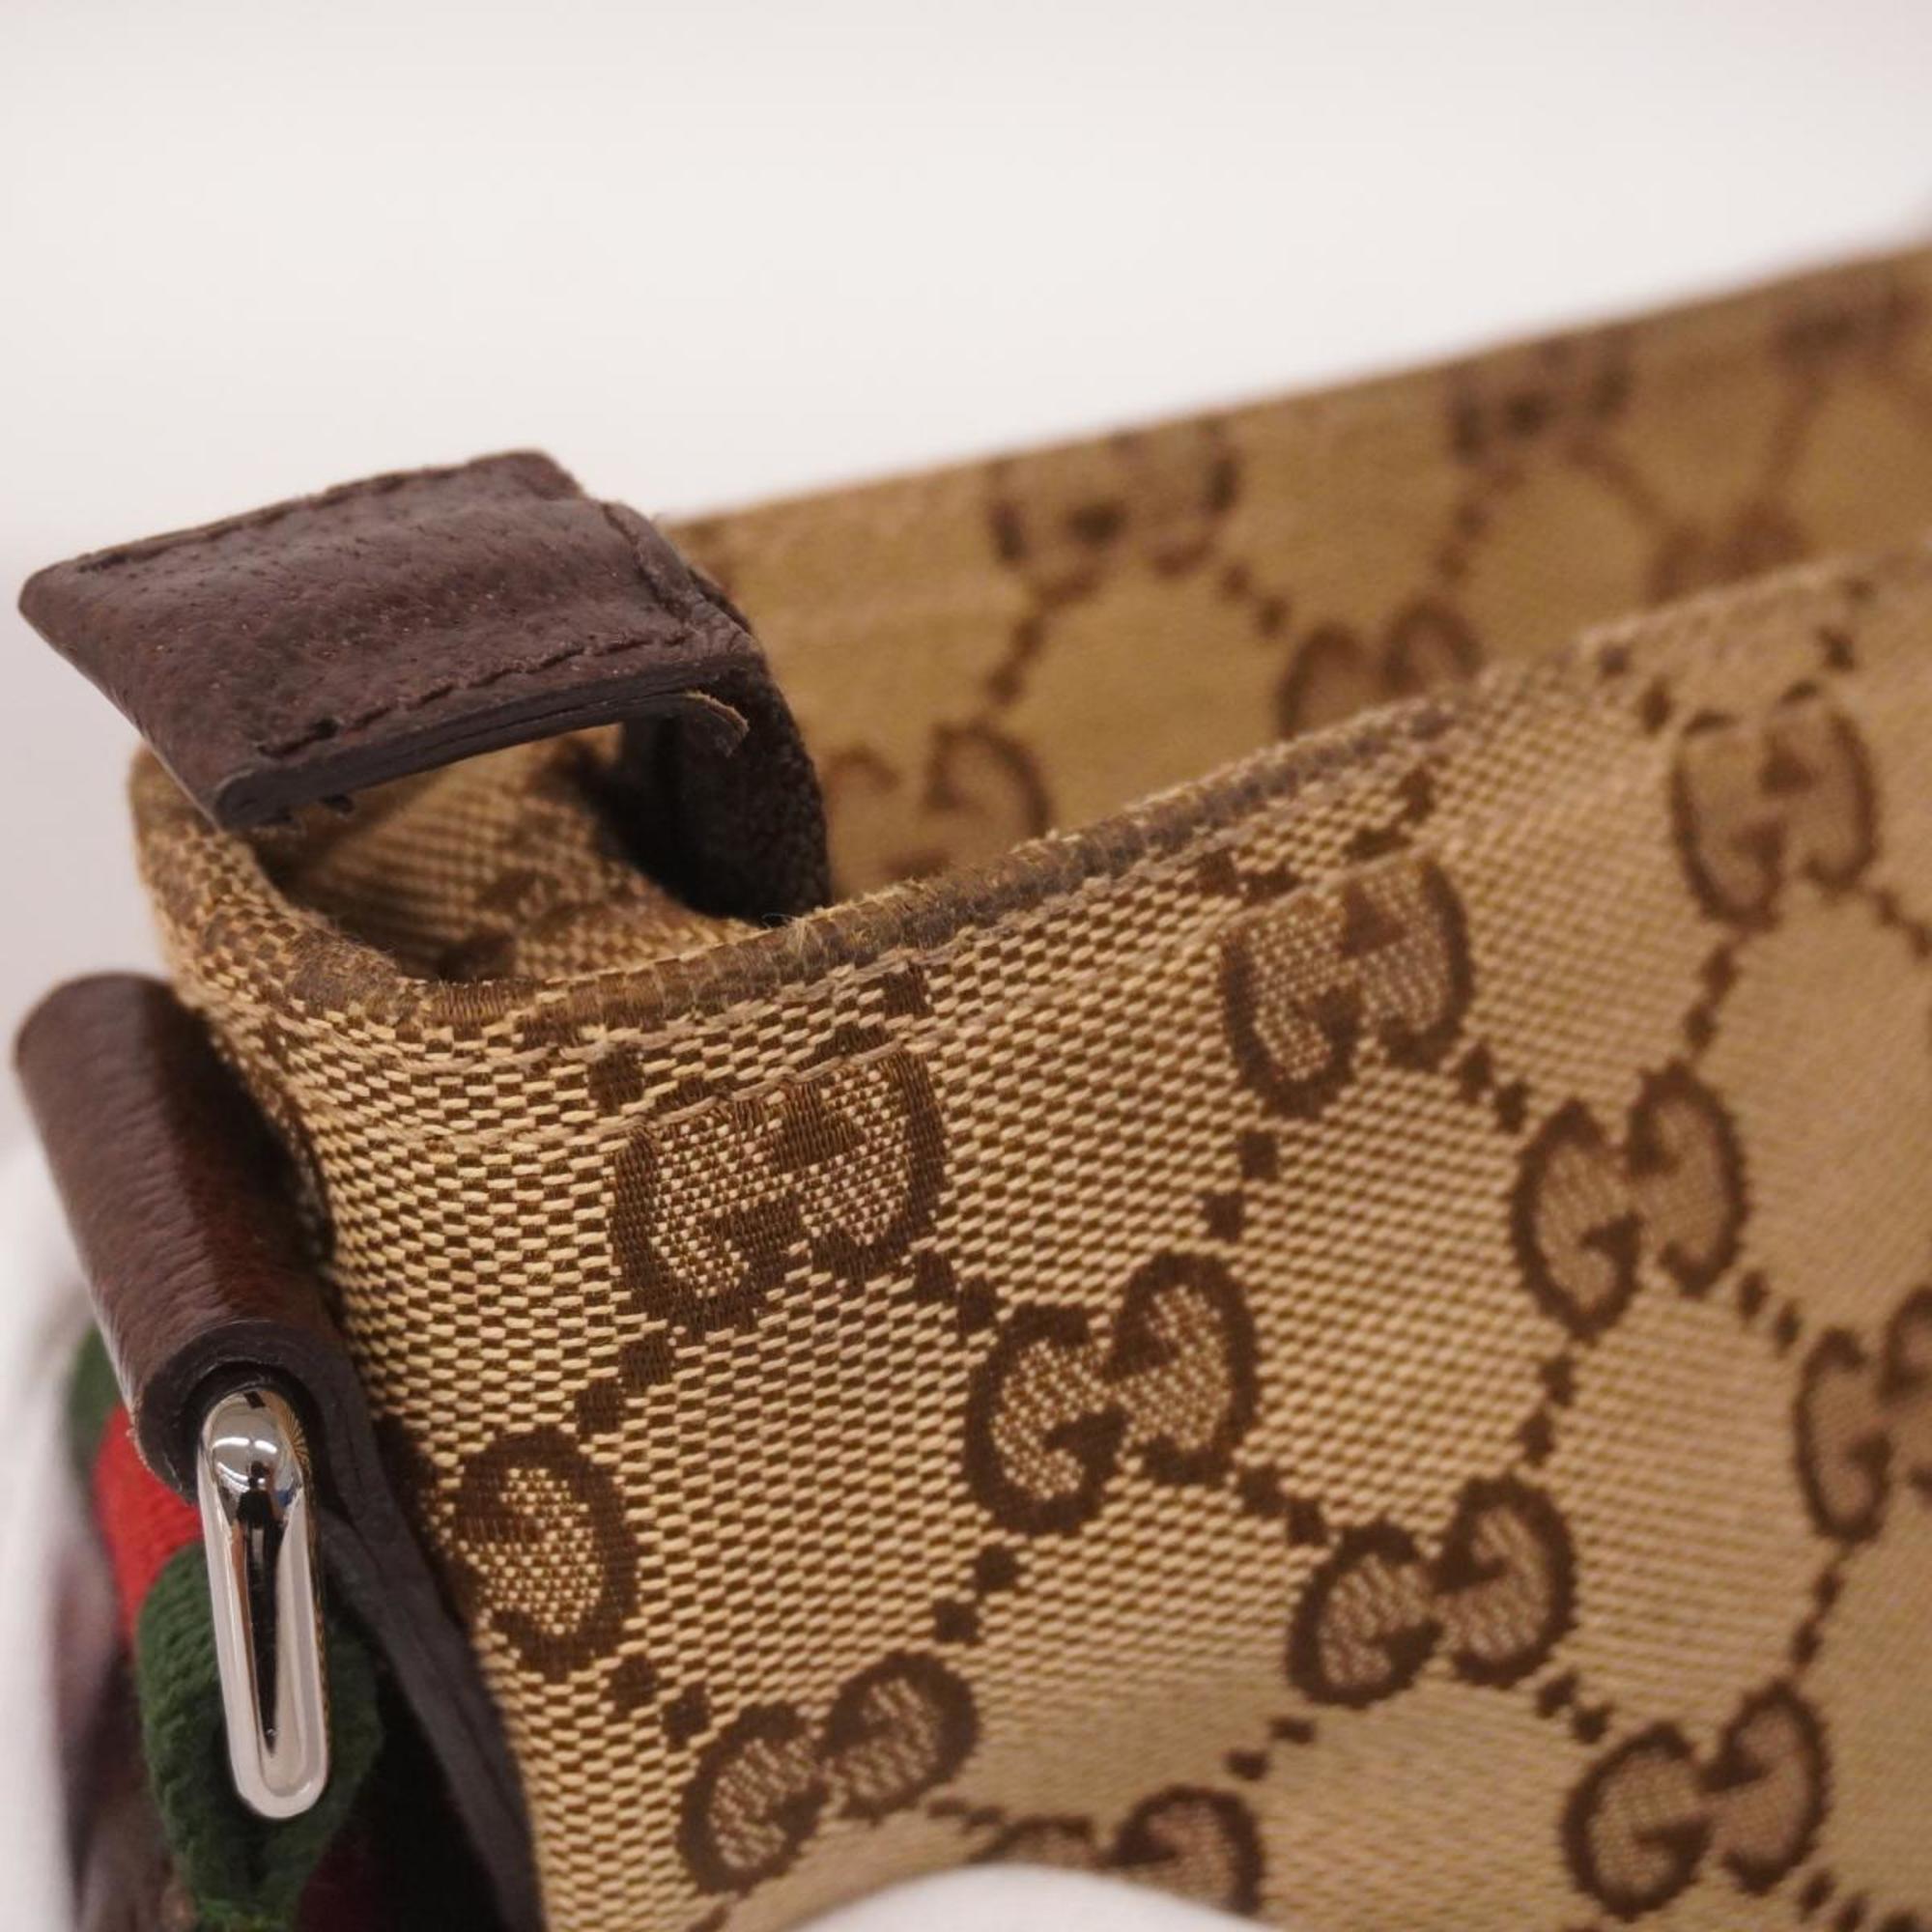 Gucci Shoulder Bag GG Canvas Sherry Line 189749 Brown Women's